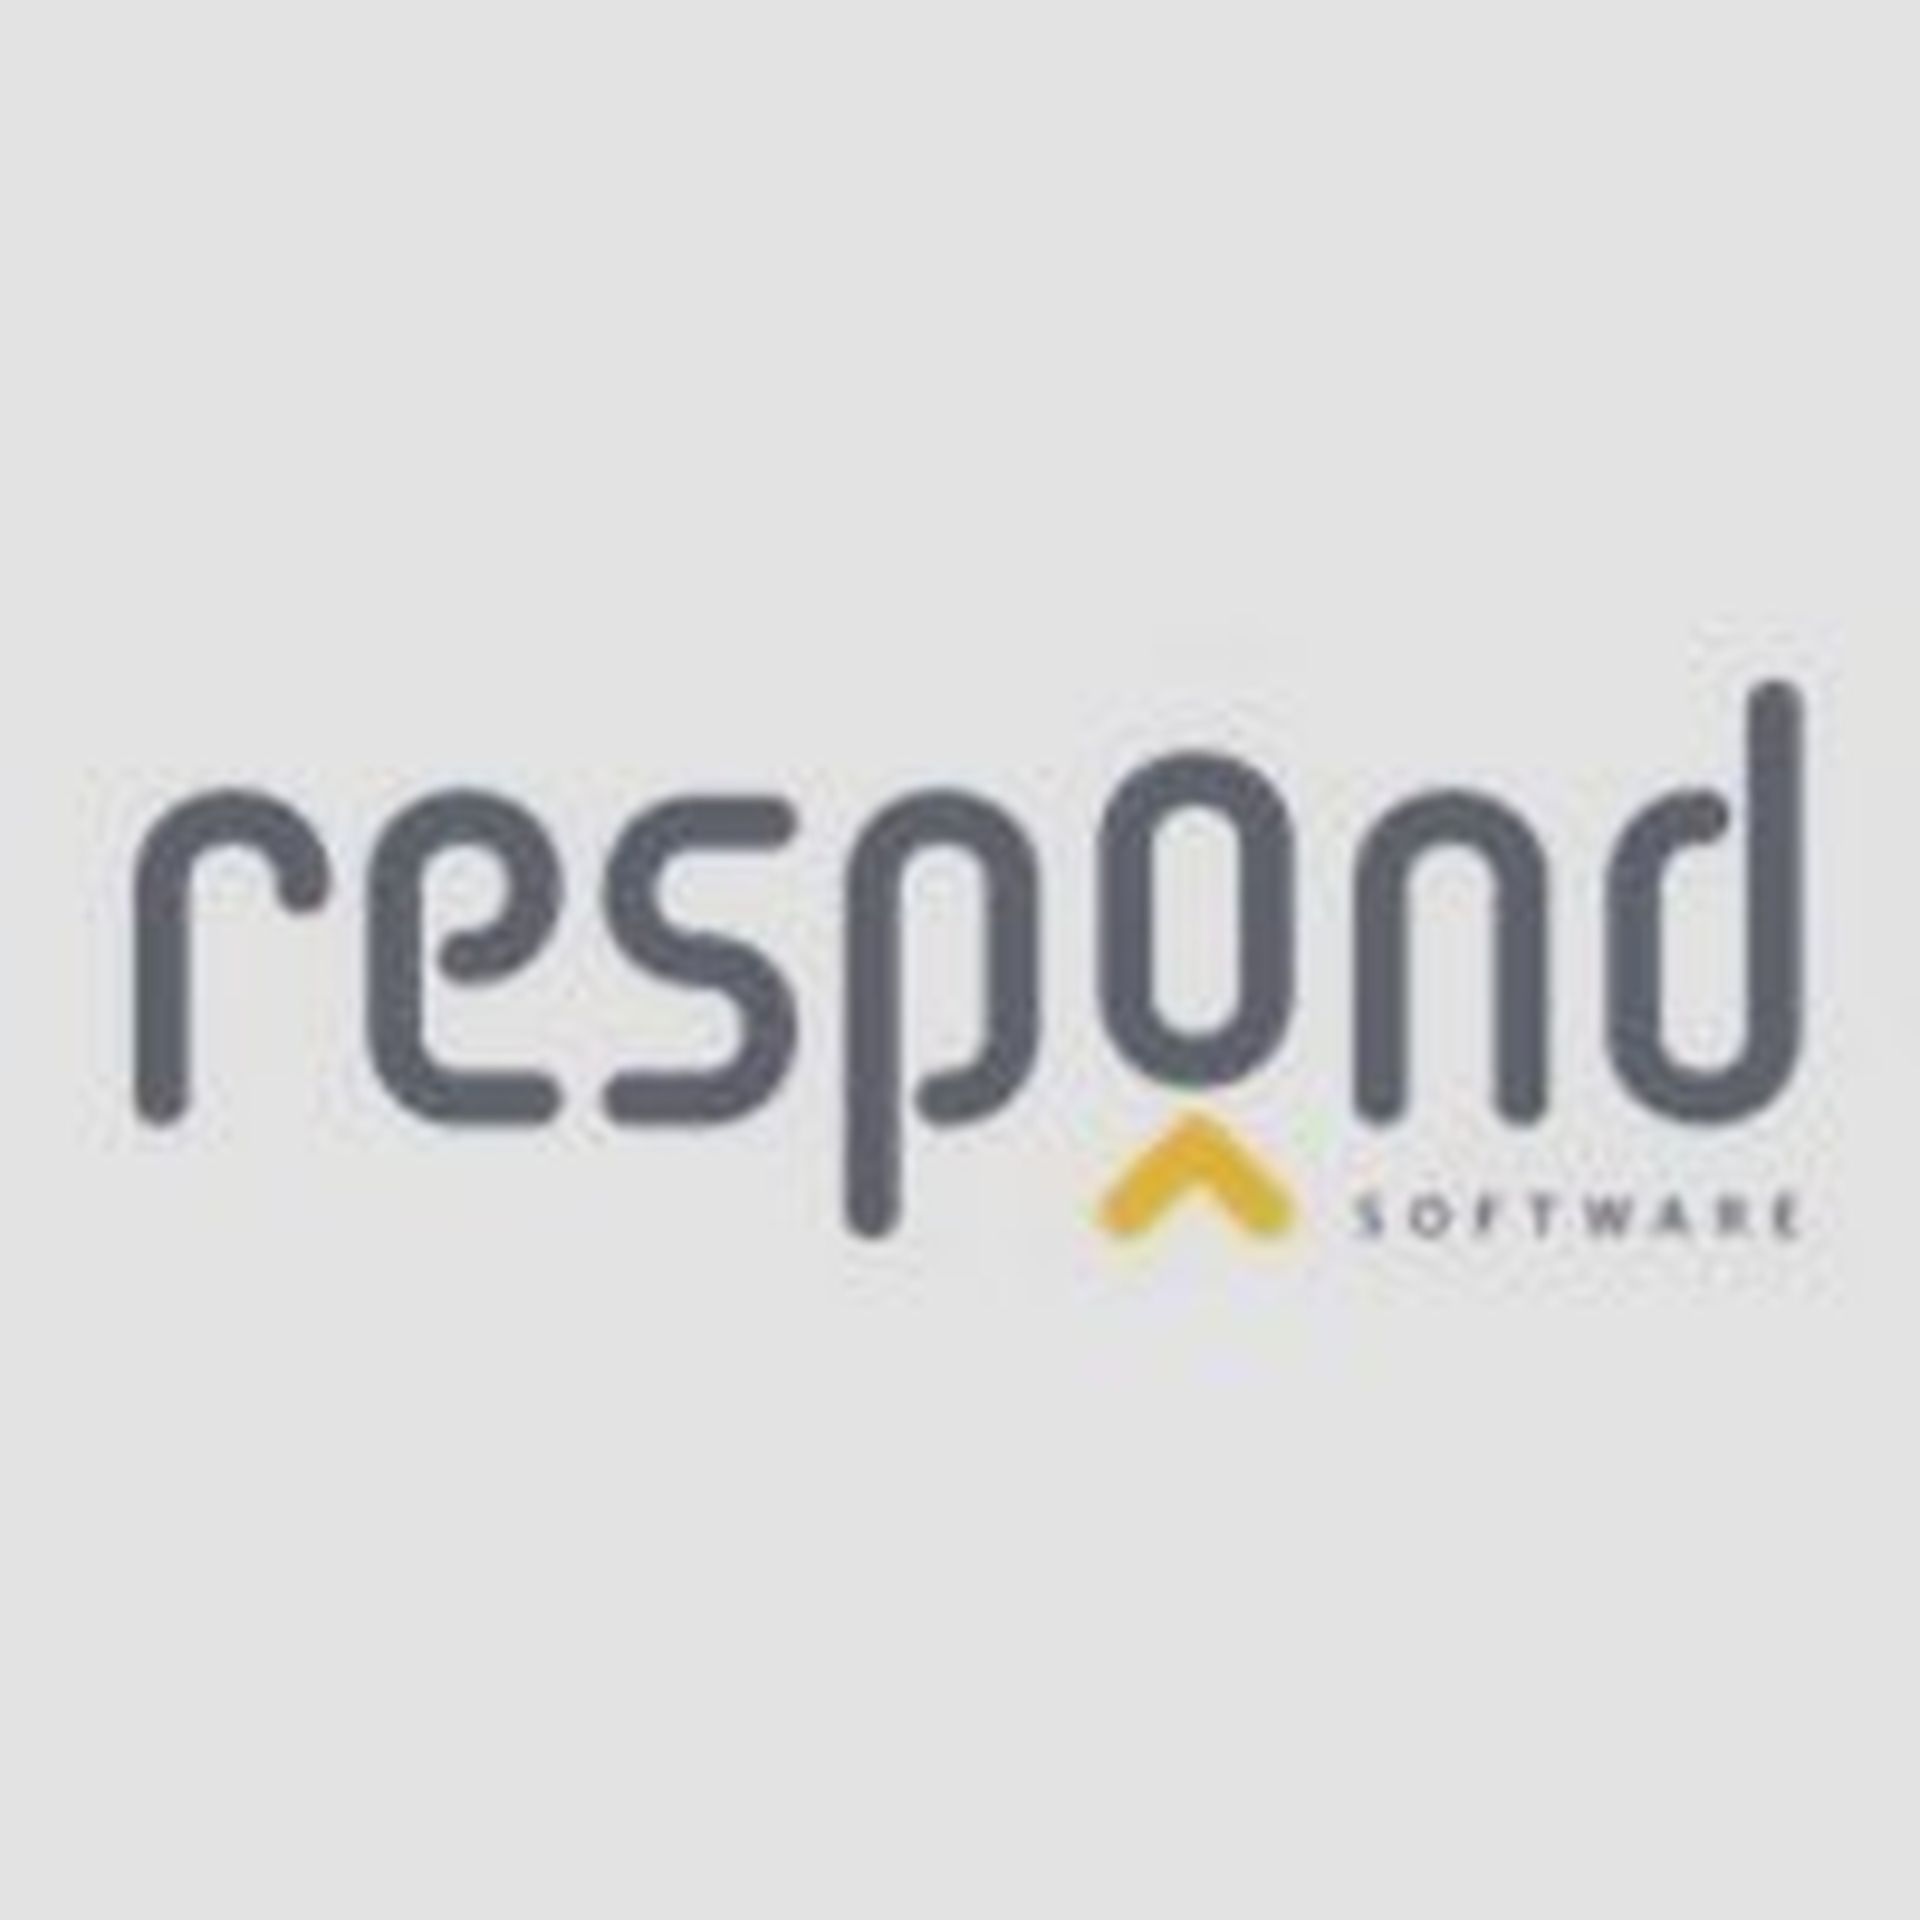 Twitter: @RespondSoftware